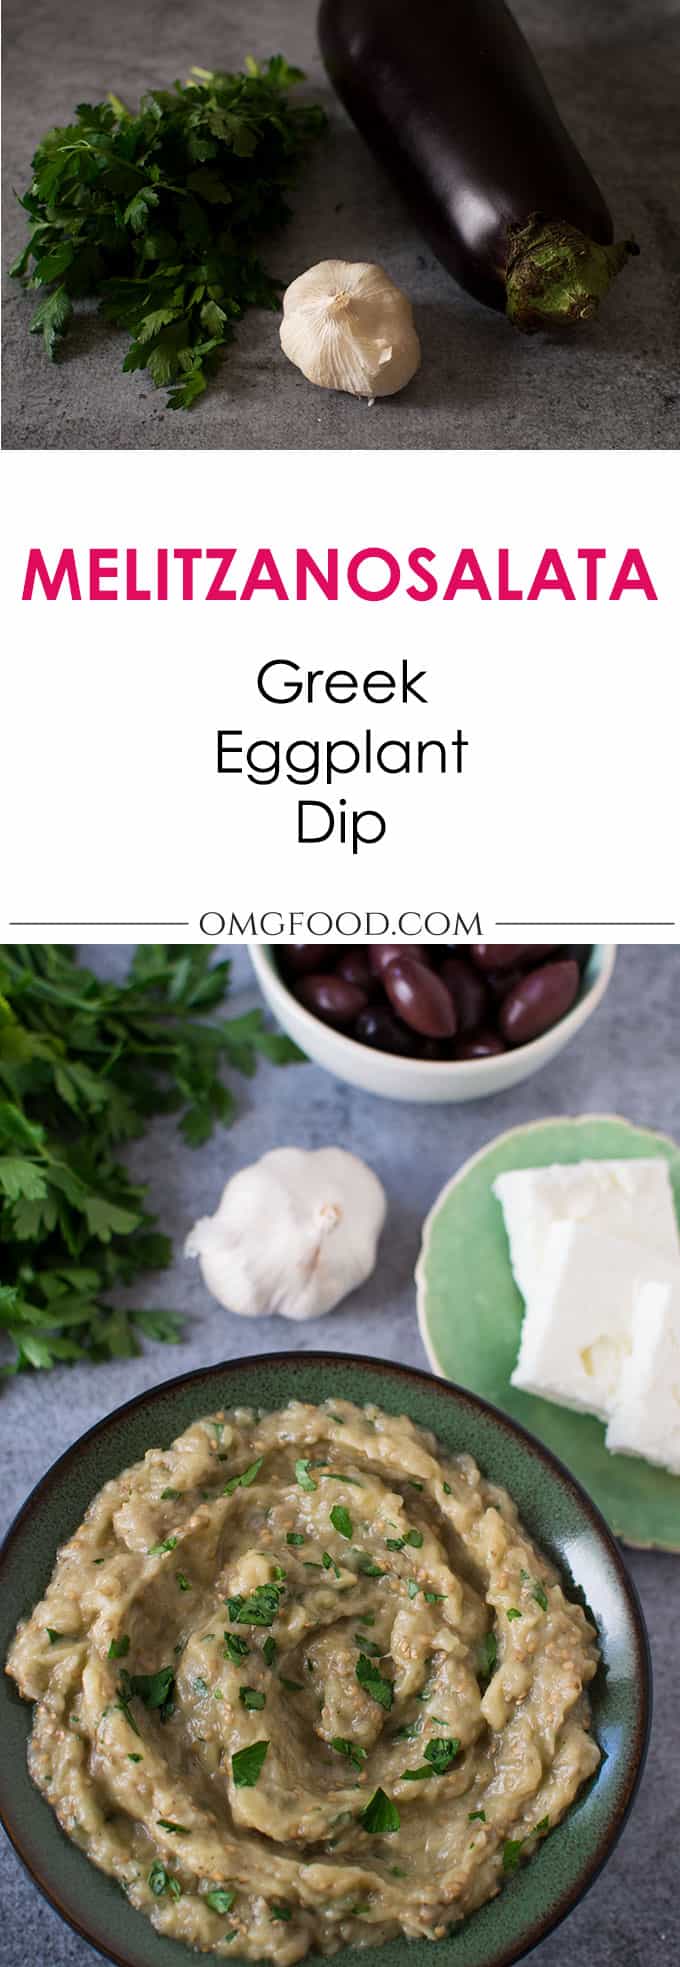 Pinterest banner for melitzanosalata (Greek eggplant dip).